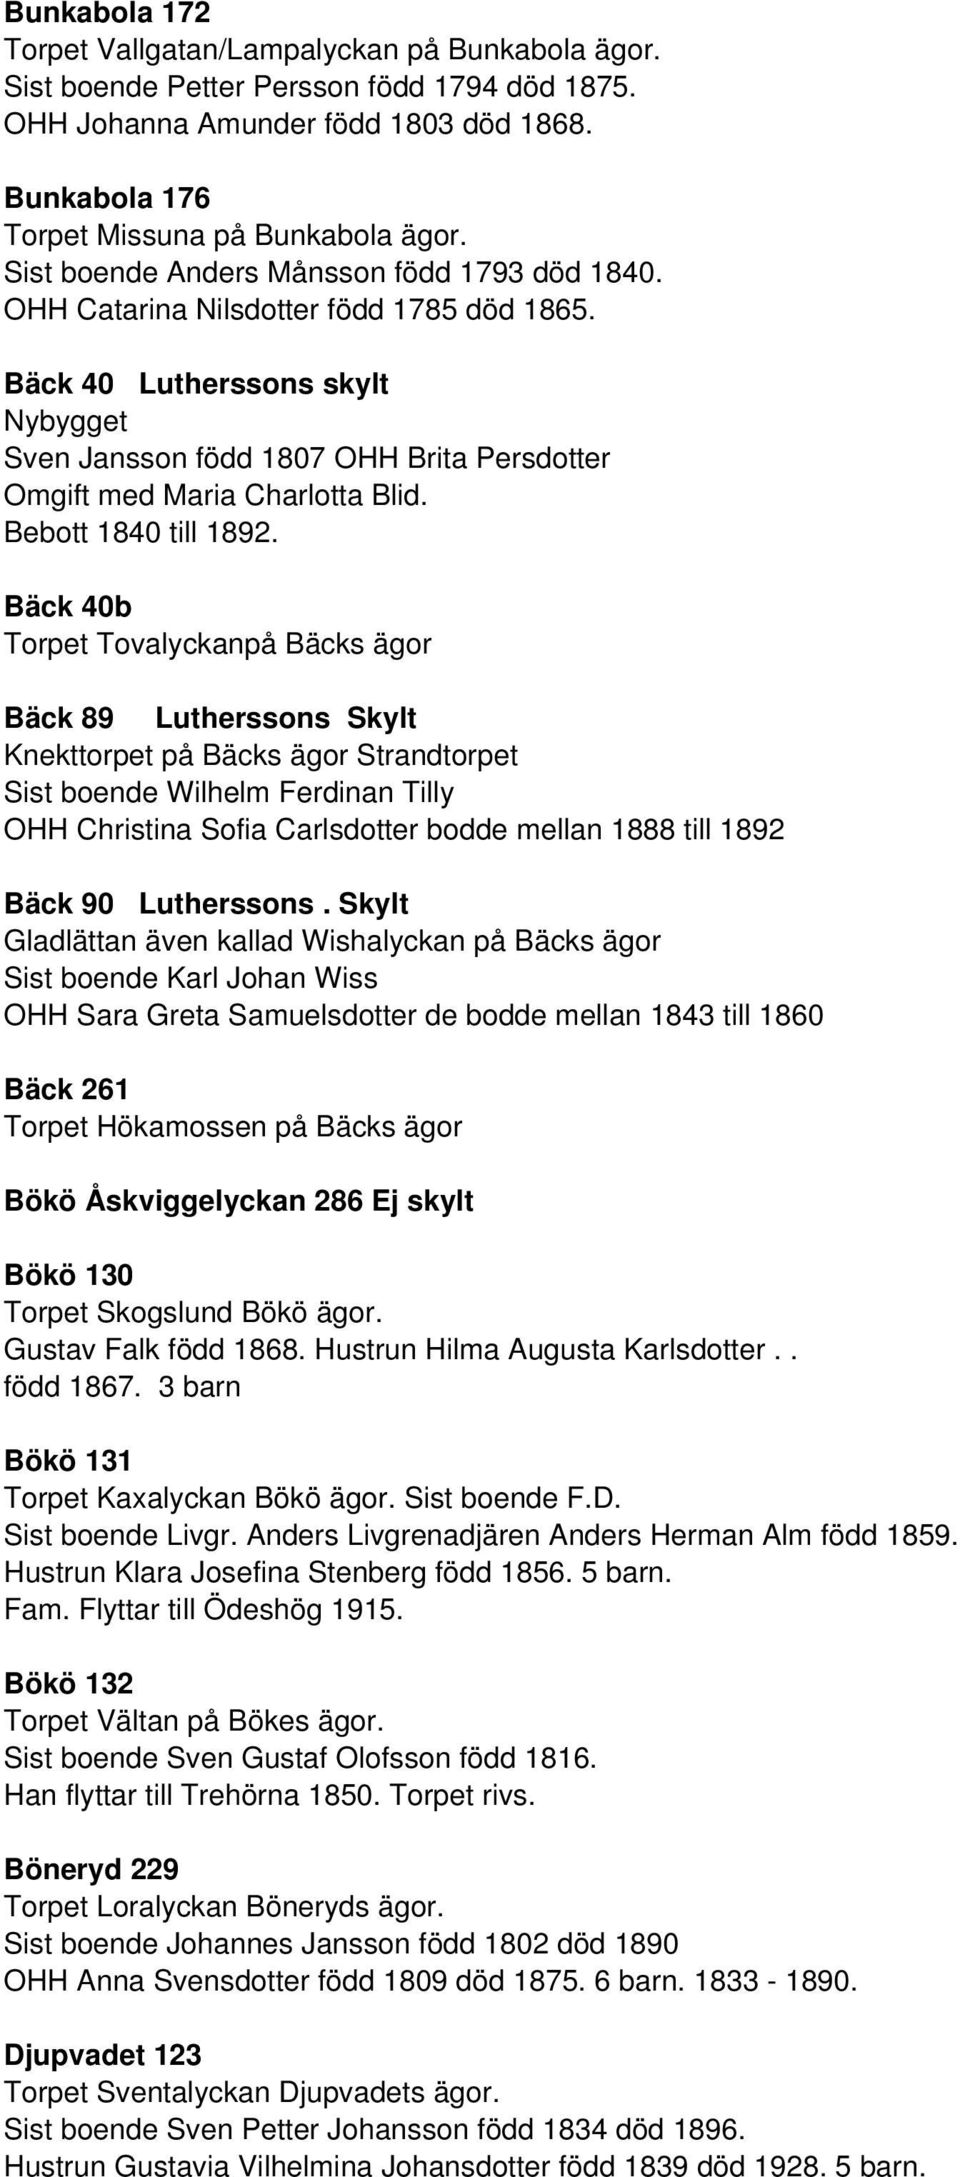 Alboryd 127 Alboryd Sist boende Karl Johan Karlsson född OHH Hilma ...